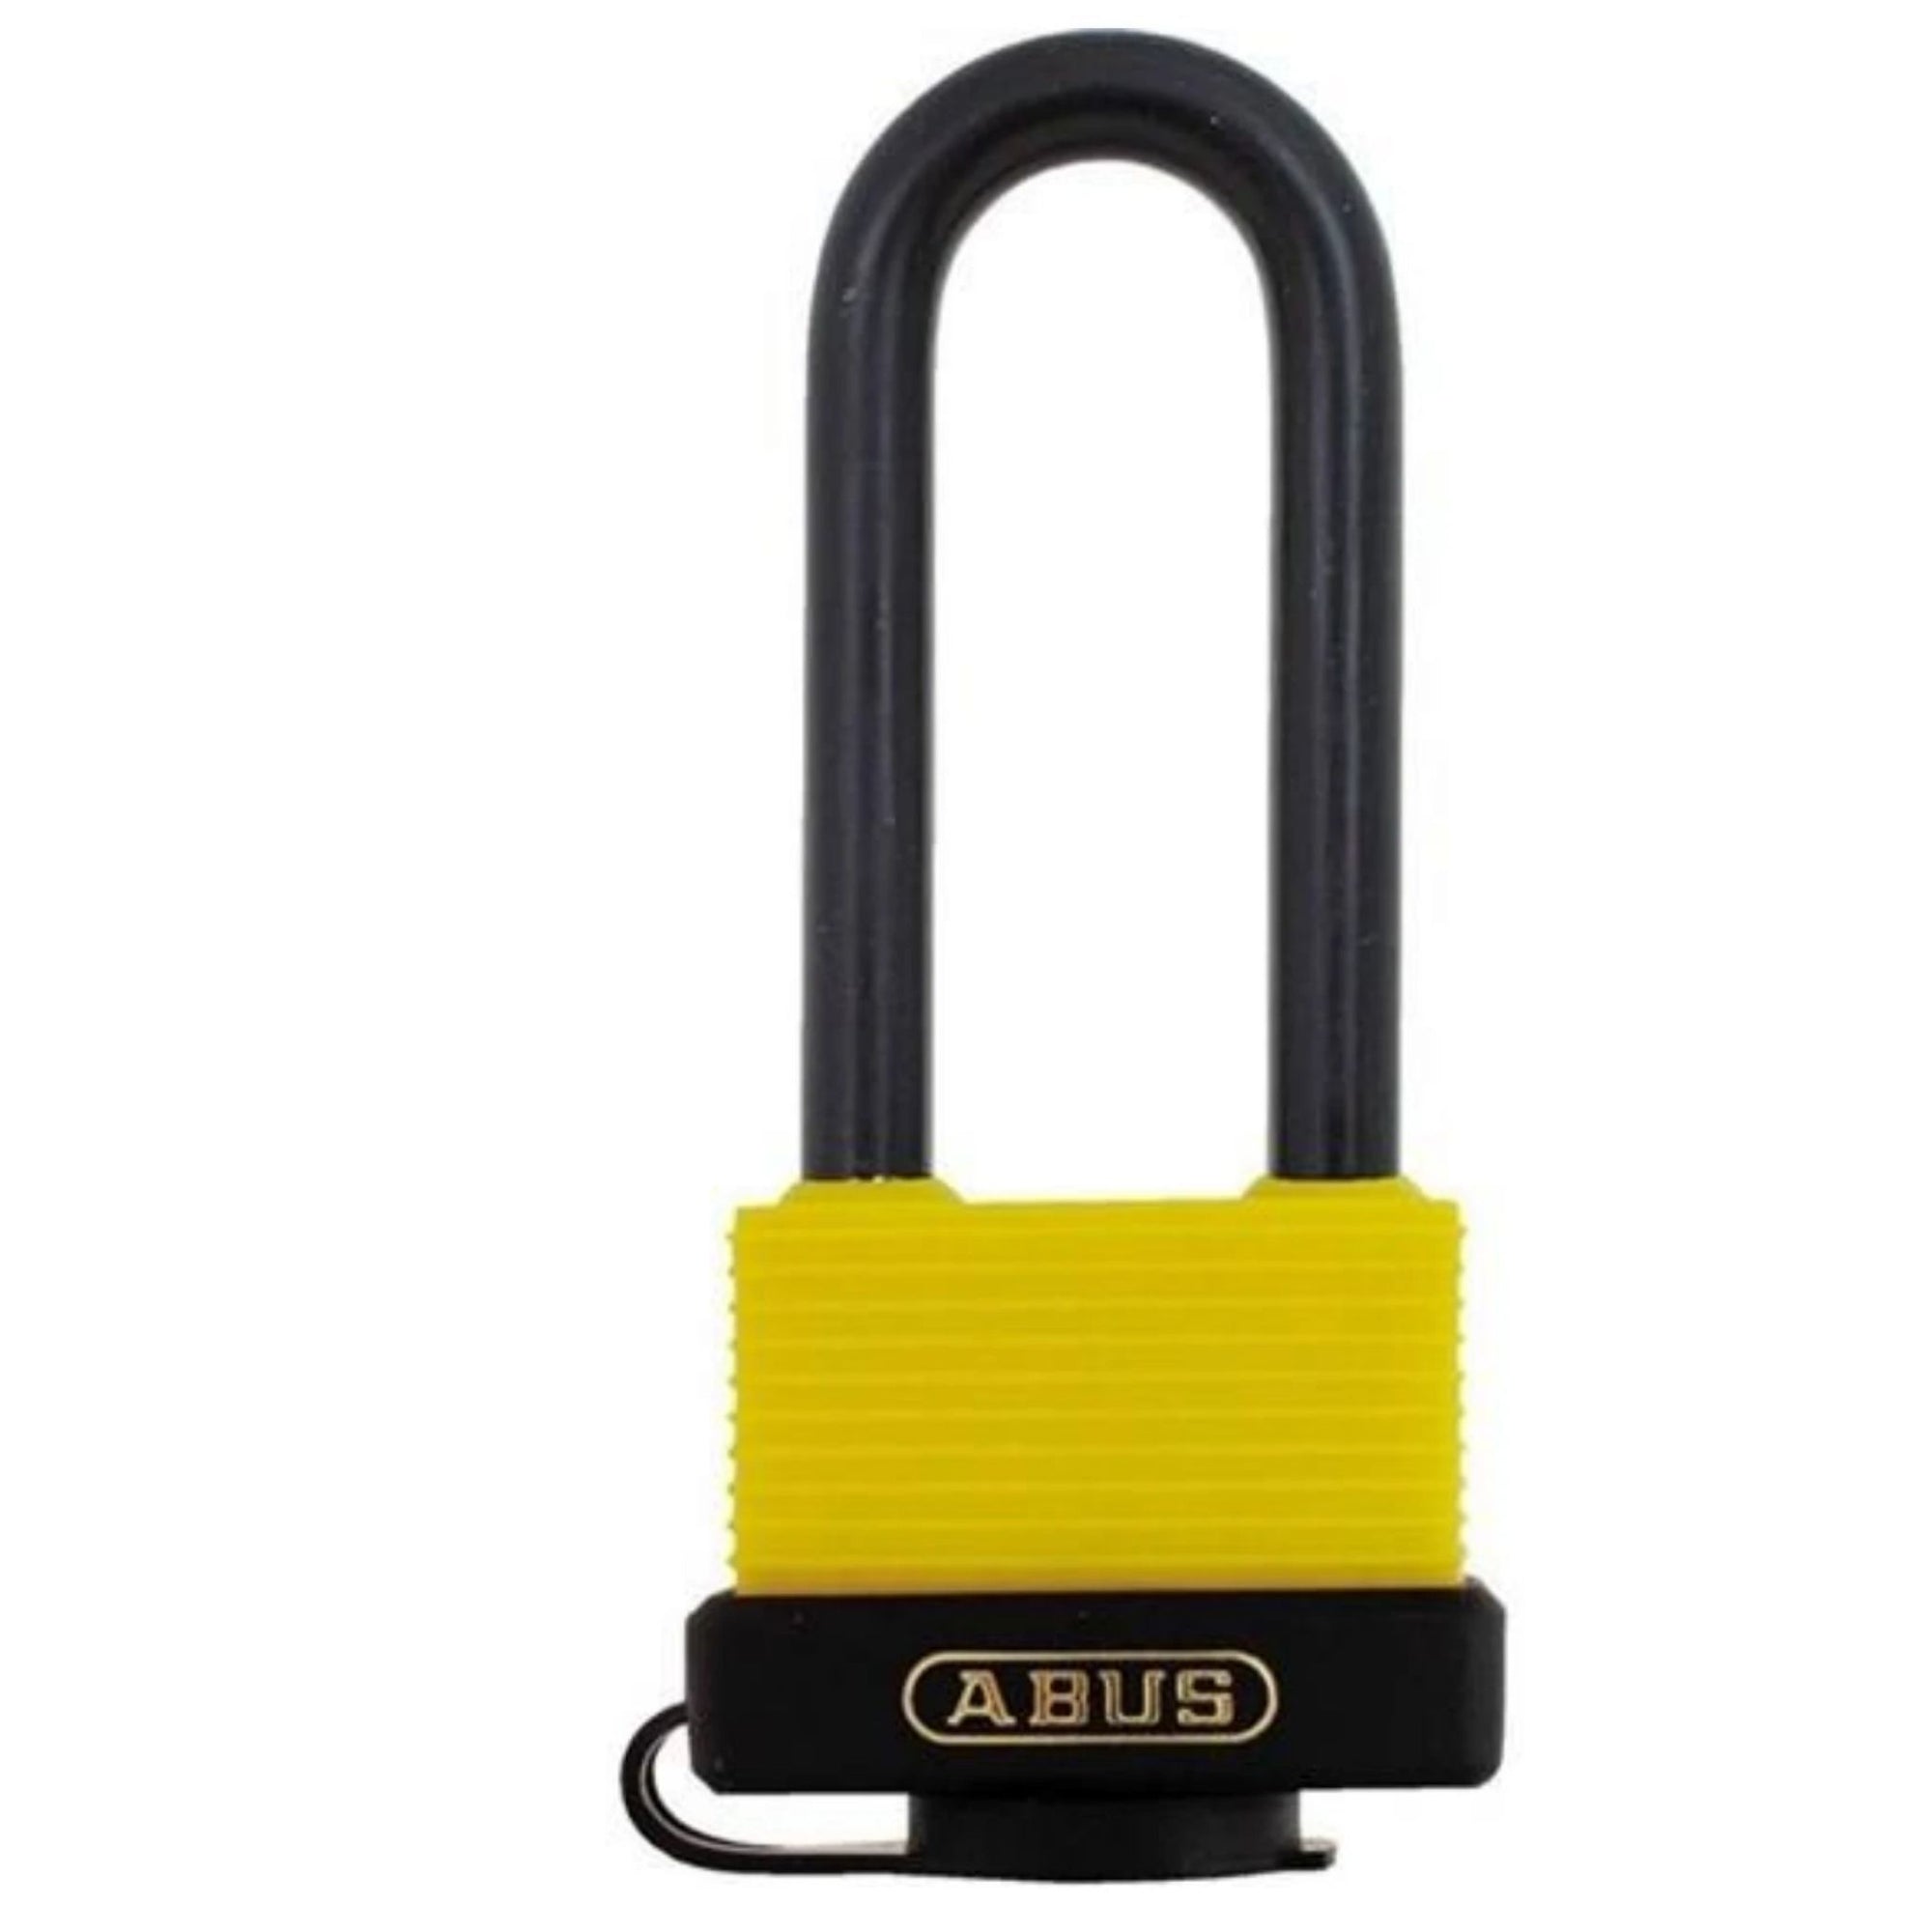 Abus 70/45HB63 KA 6401 Lock Keyed Alike Weatherproof Brass Padlocks with 2.5-Inch Shackle Keyed Alike to Match Key Number KA6401 - The Lock Source